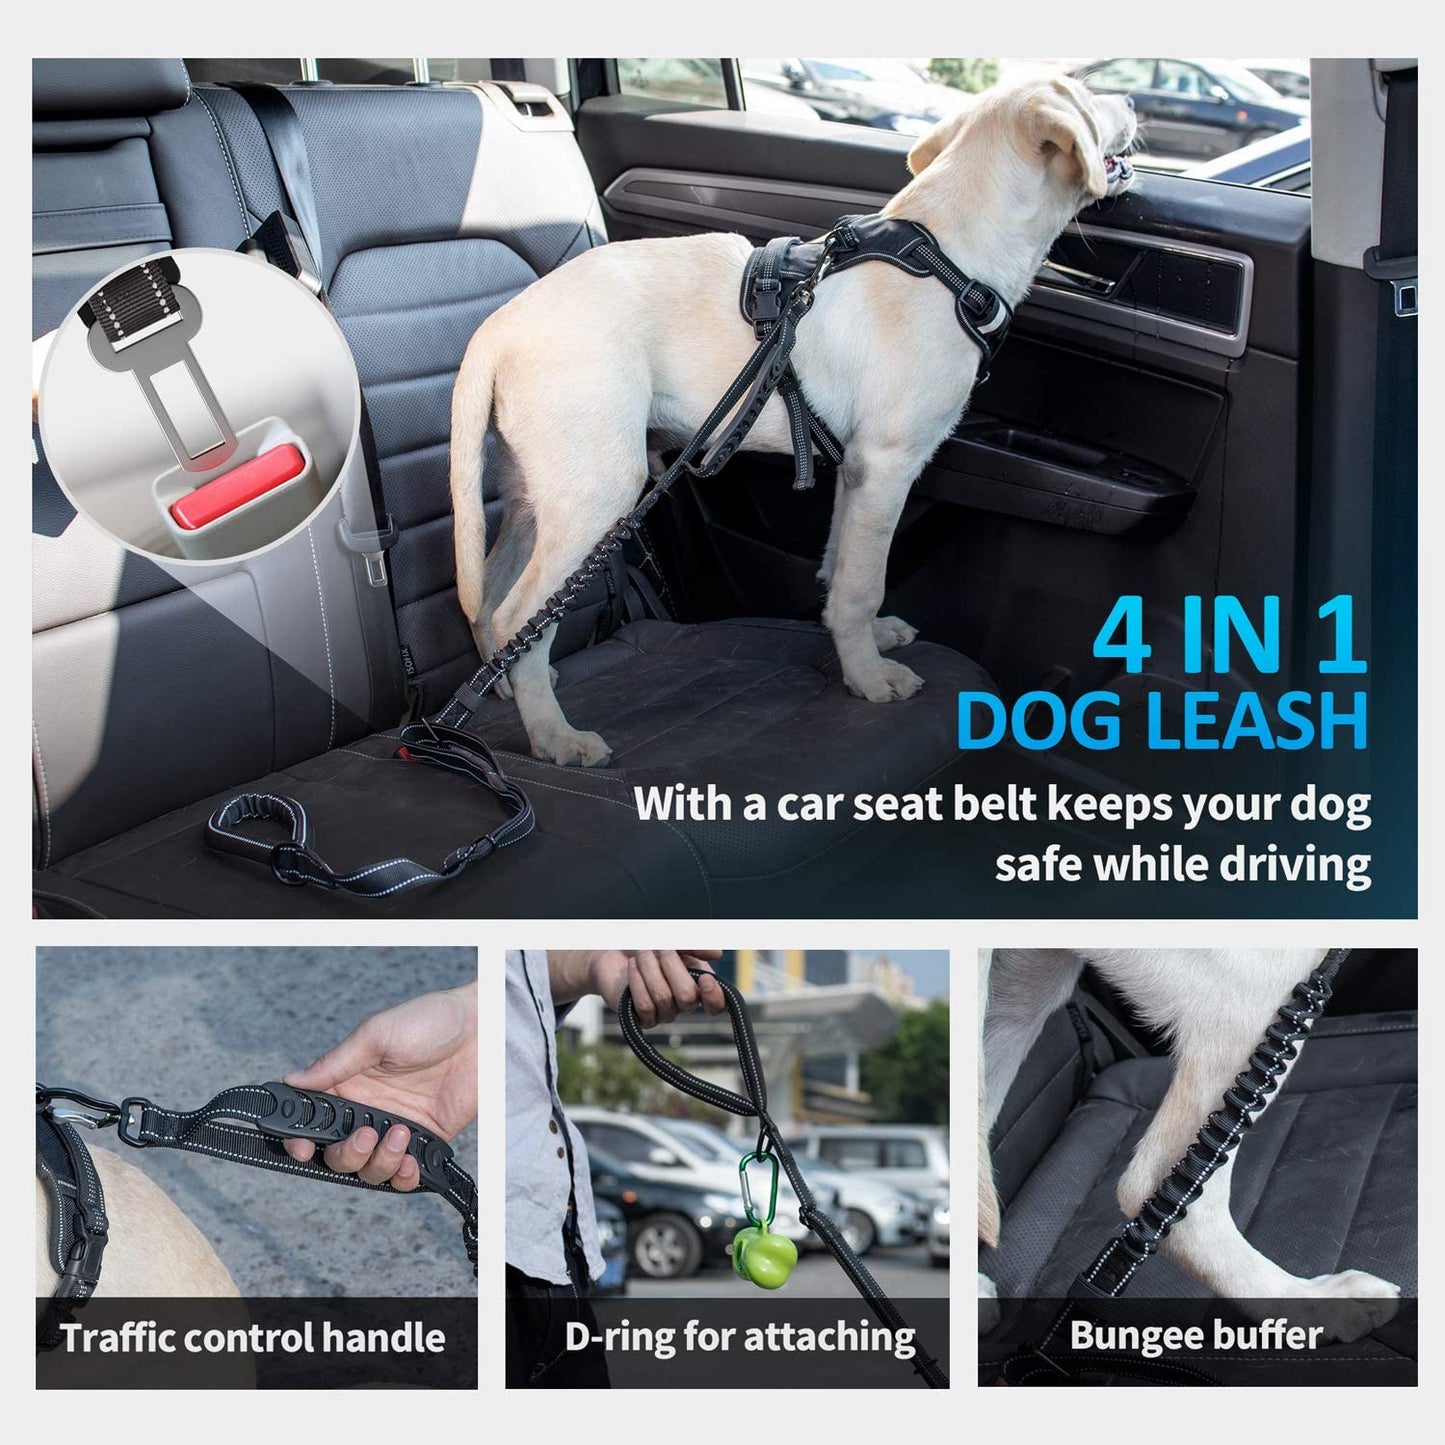 Dog Leash, Dog Leash for Large Dogs, Multifunctional Dog Leashes for Medium Dogs, Adjustable Dog Leash with Car Seatbelt, 4-6 FT Strong Bungee Dog Leash